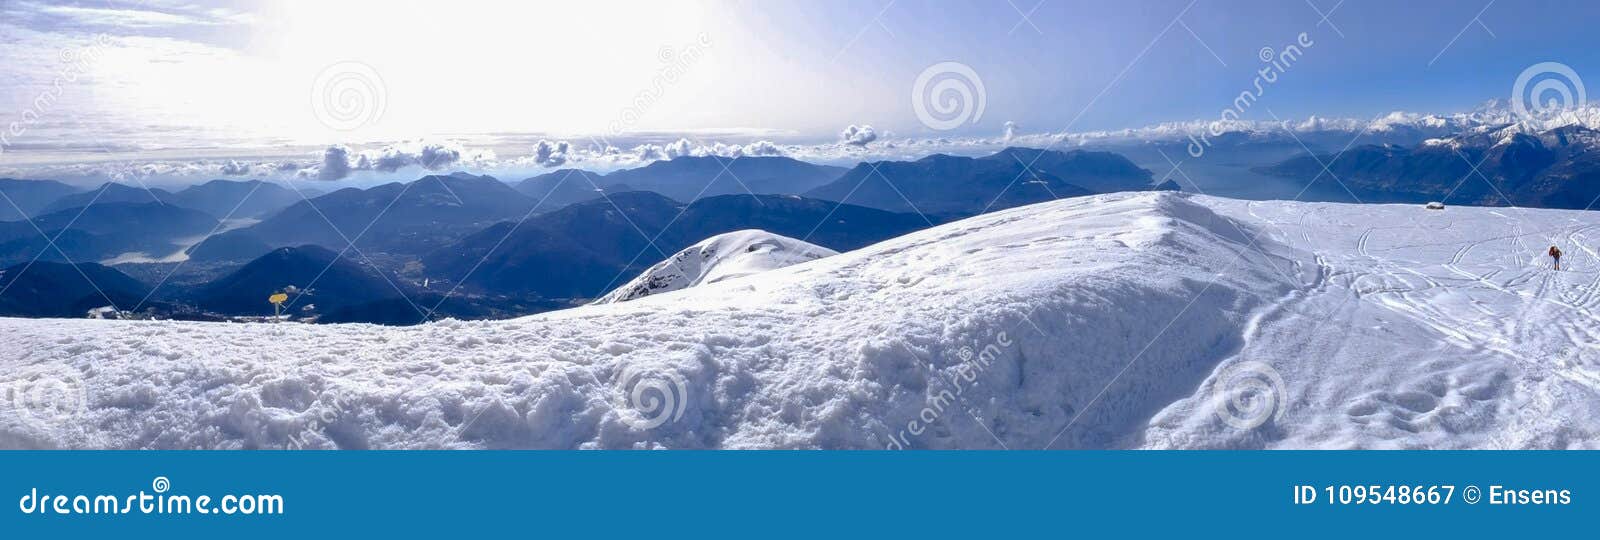 panoramic photo of mountain landscape mount lema, snowy peak wit